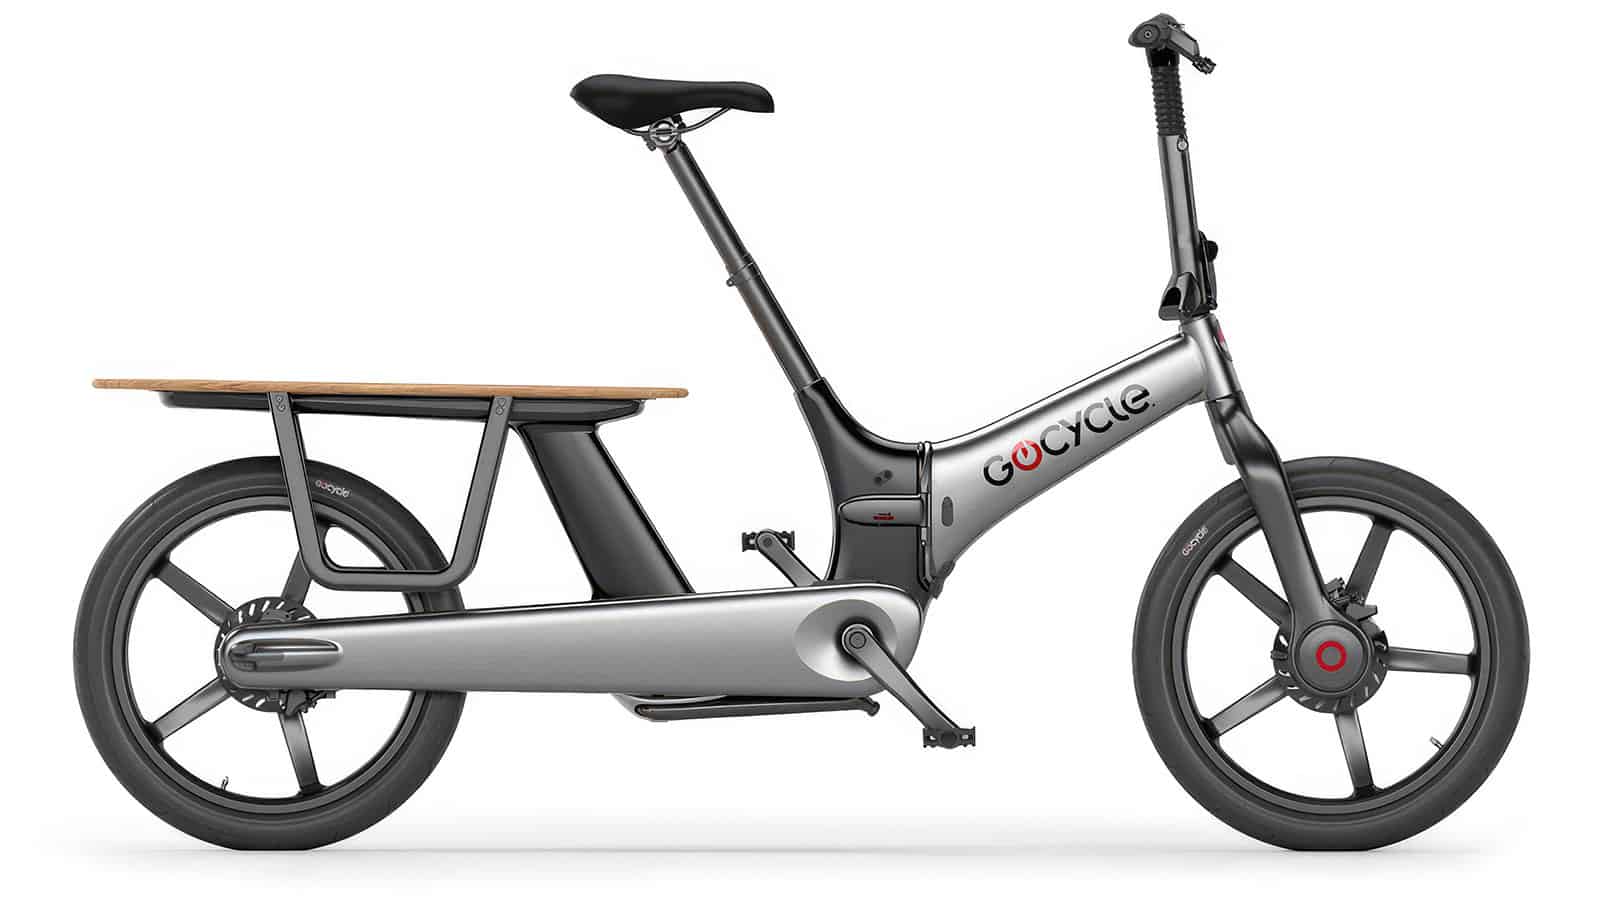 Gocycle CXi electric cargo bike